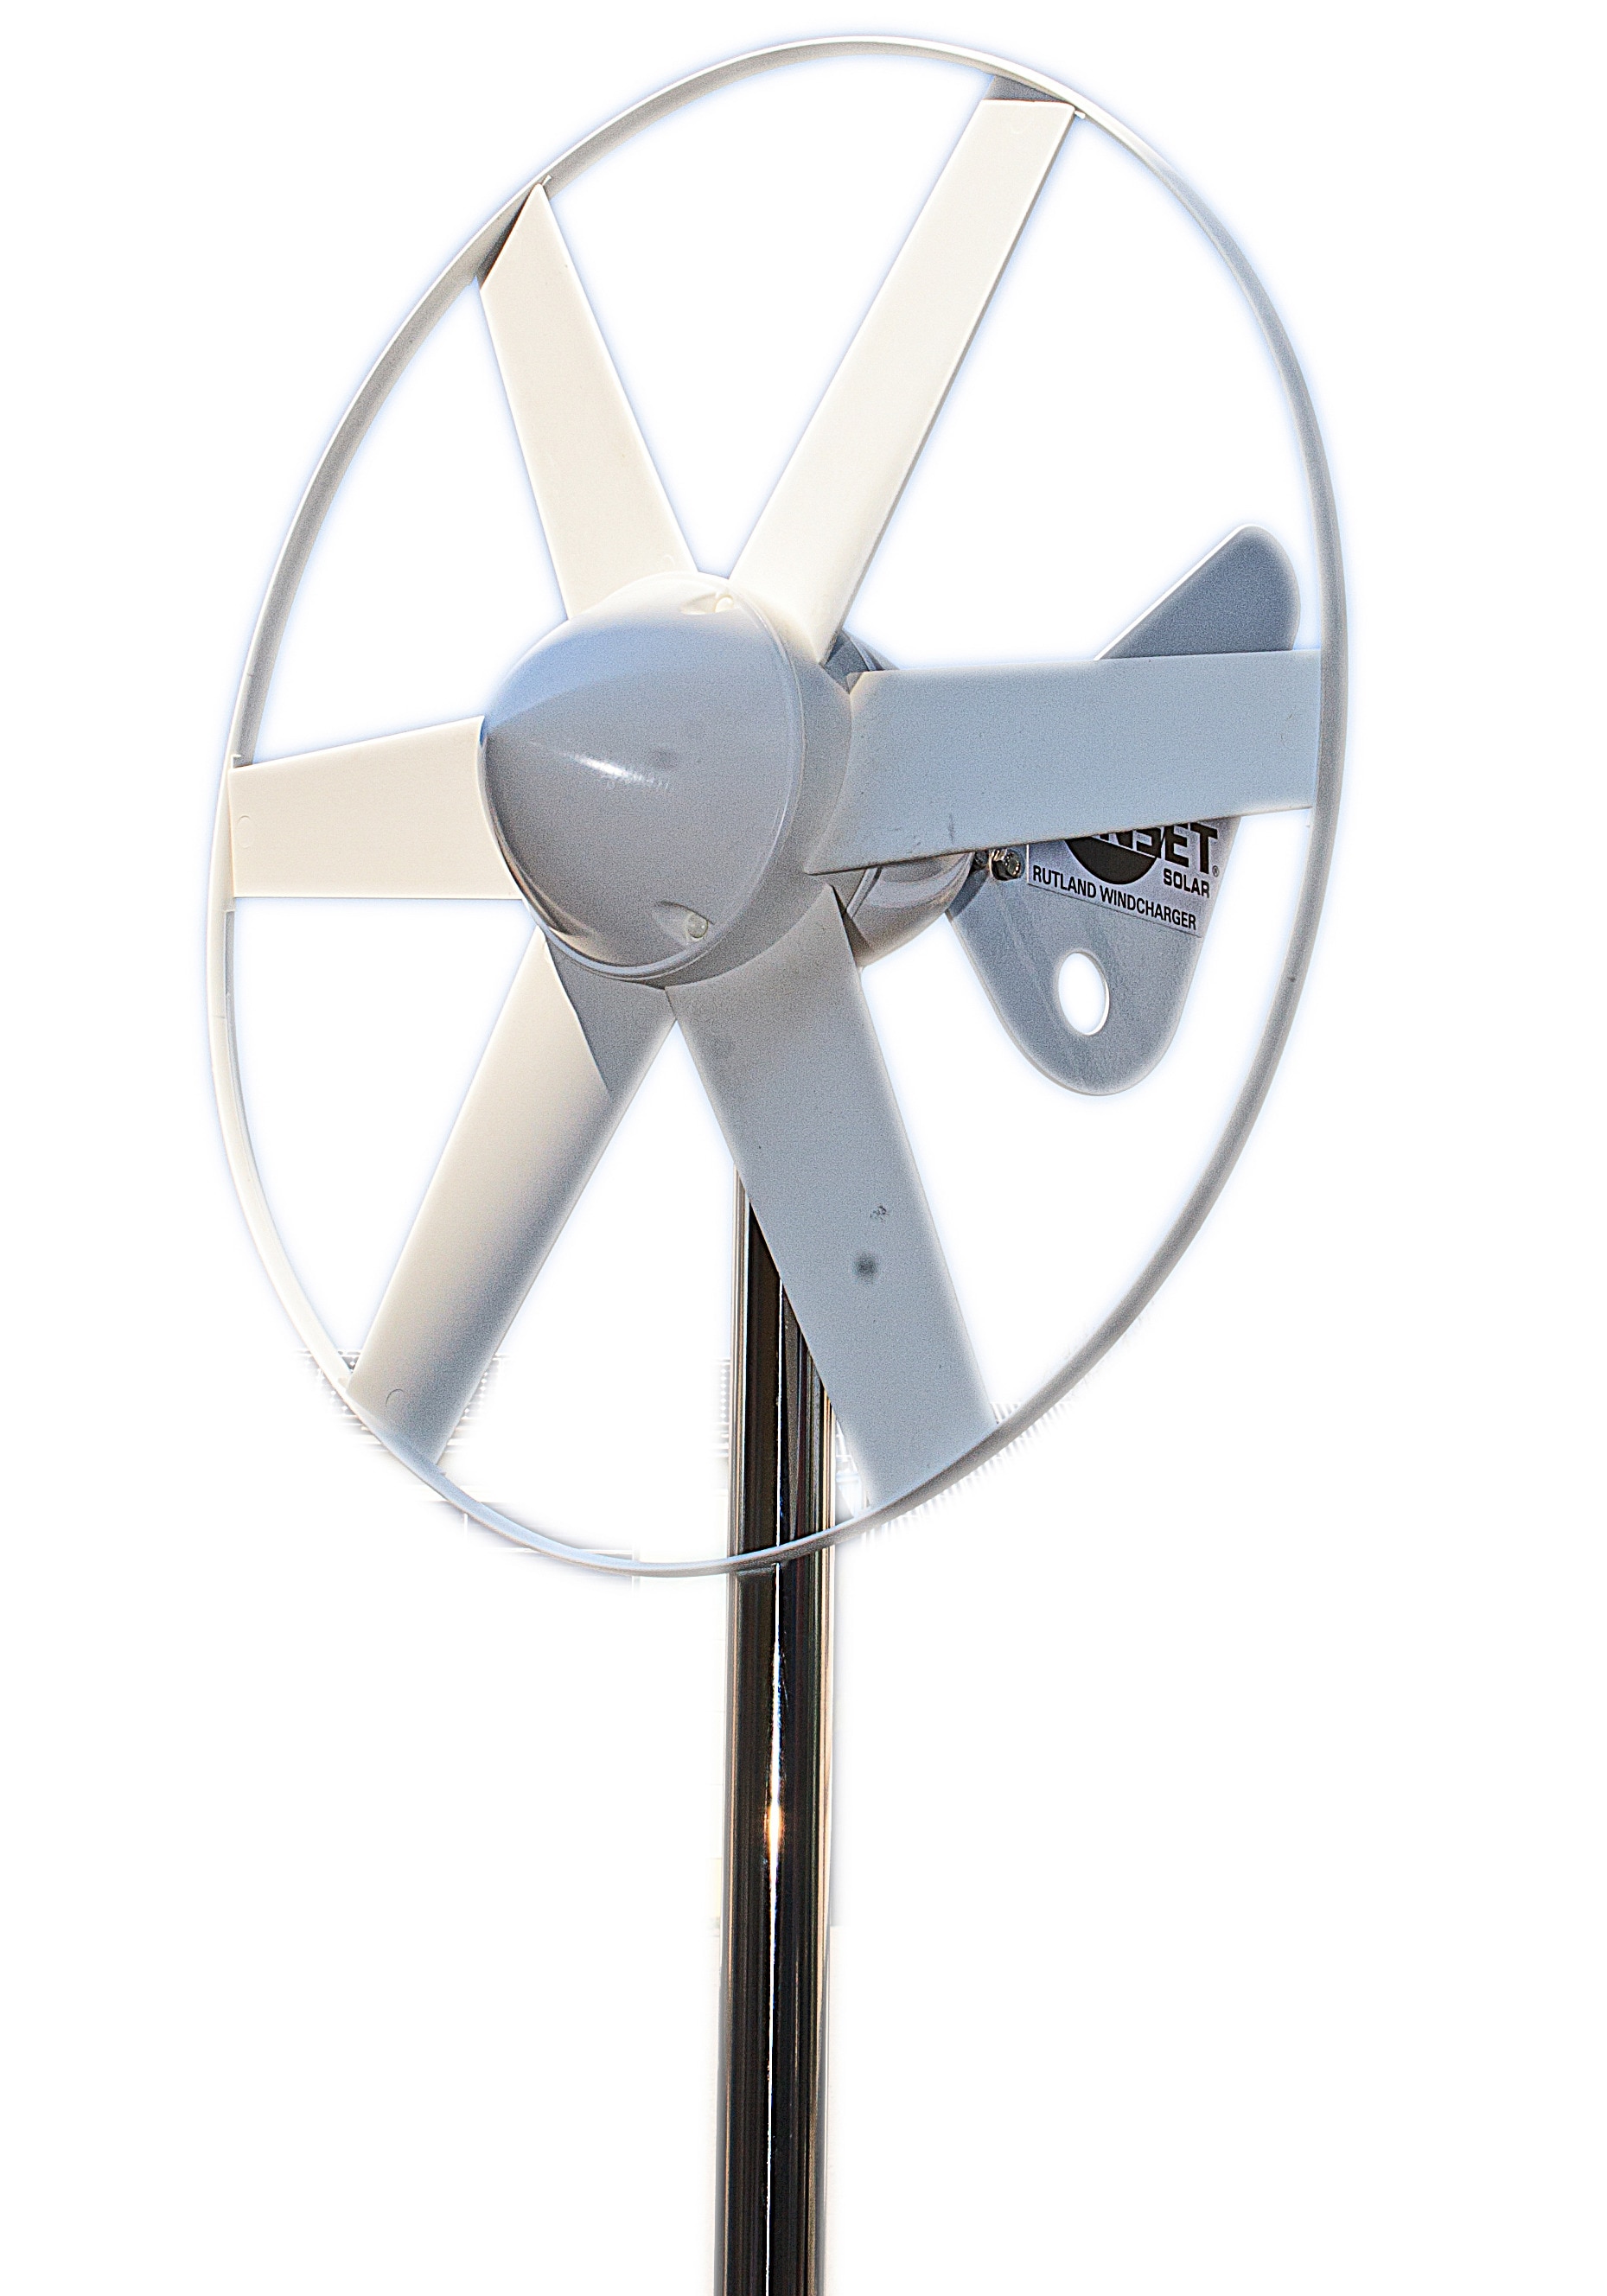 Sunset Solar Windgenerator WG 504 12 Volt jetzt bestellen!